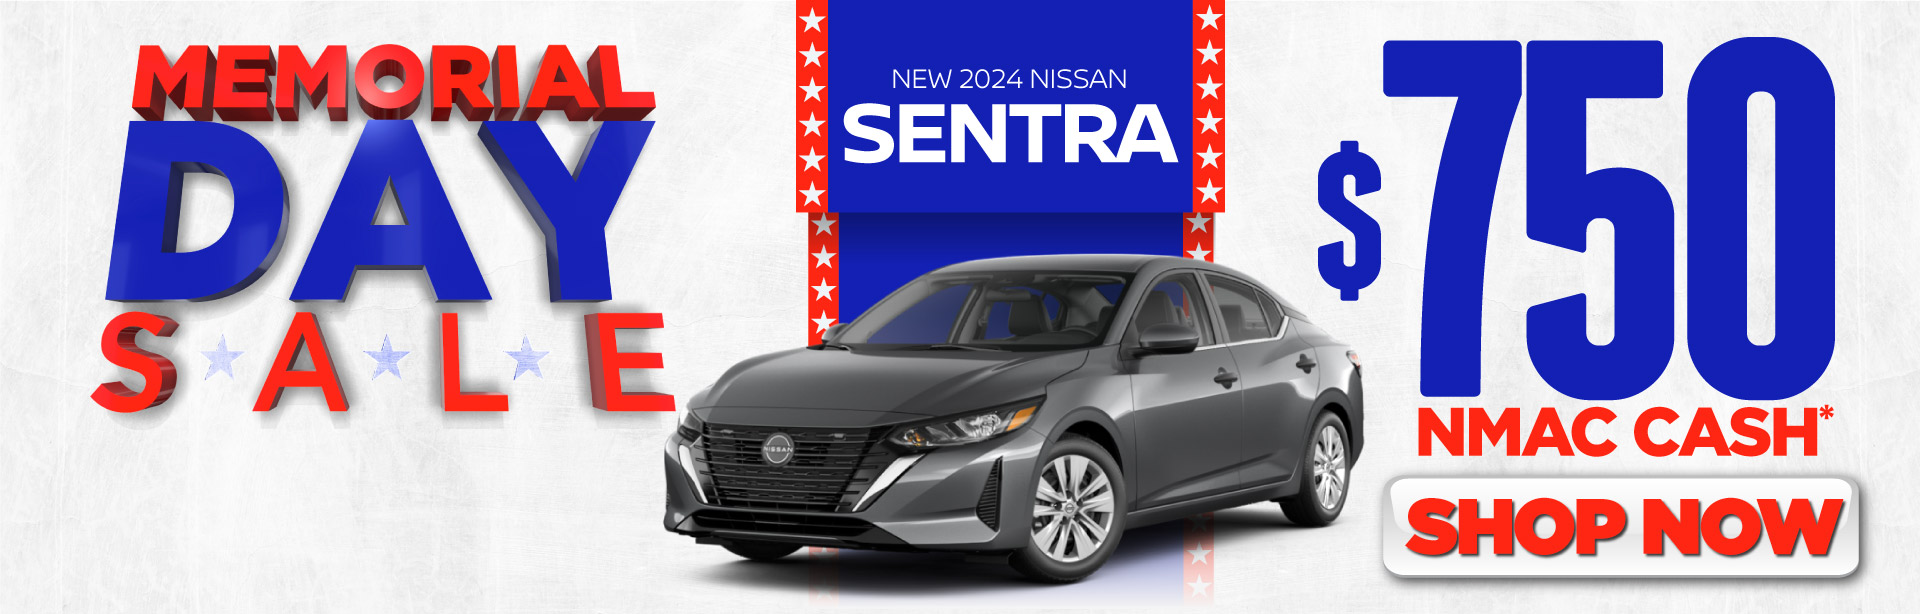 New 2024 Nissan Sentra - $750 NMAC Cash* | Shop Now